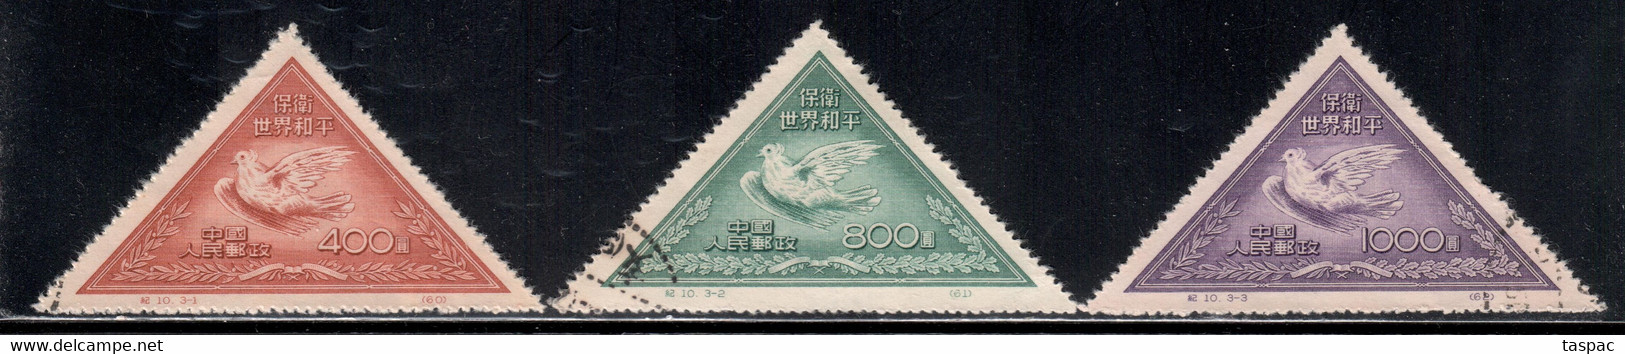 China P.R. 1951 Mi# 113-115 II Used - Reprints - Picasso Dove - Réimpressions Officielles